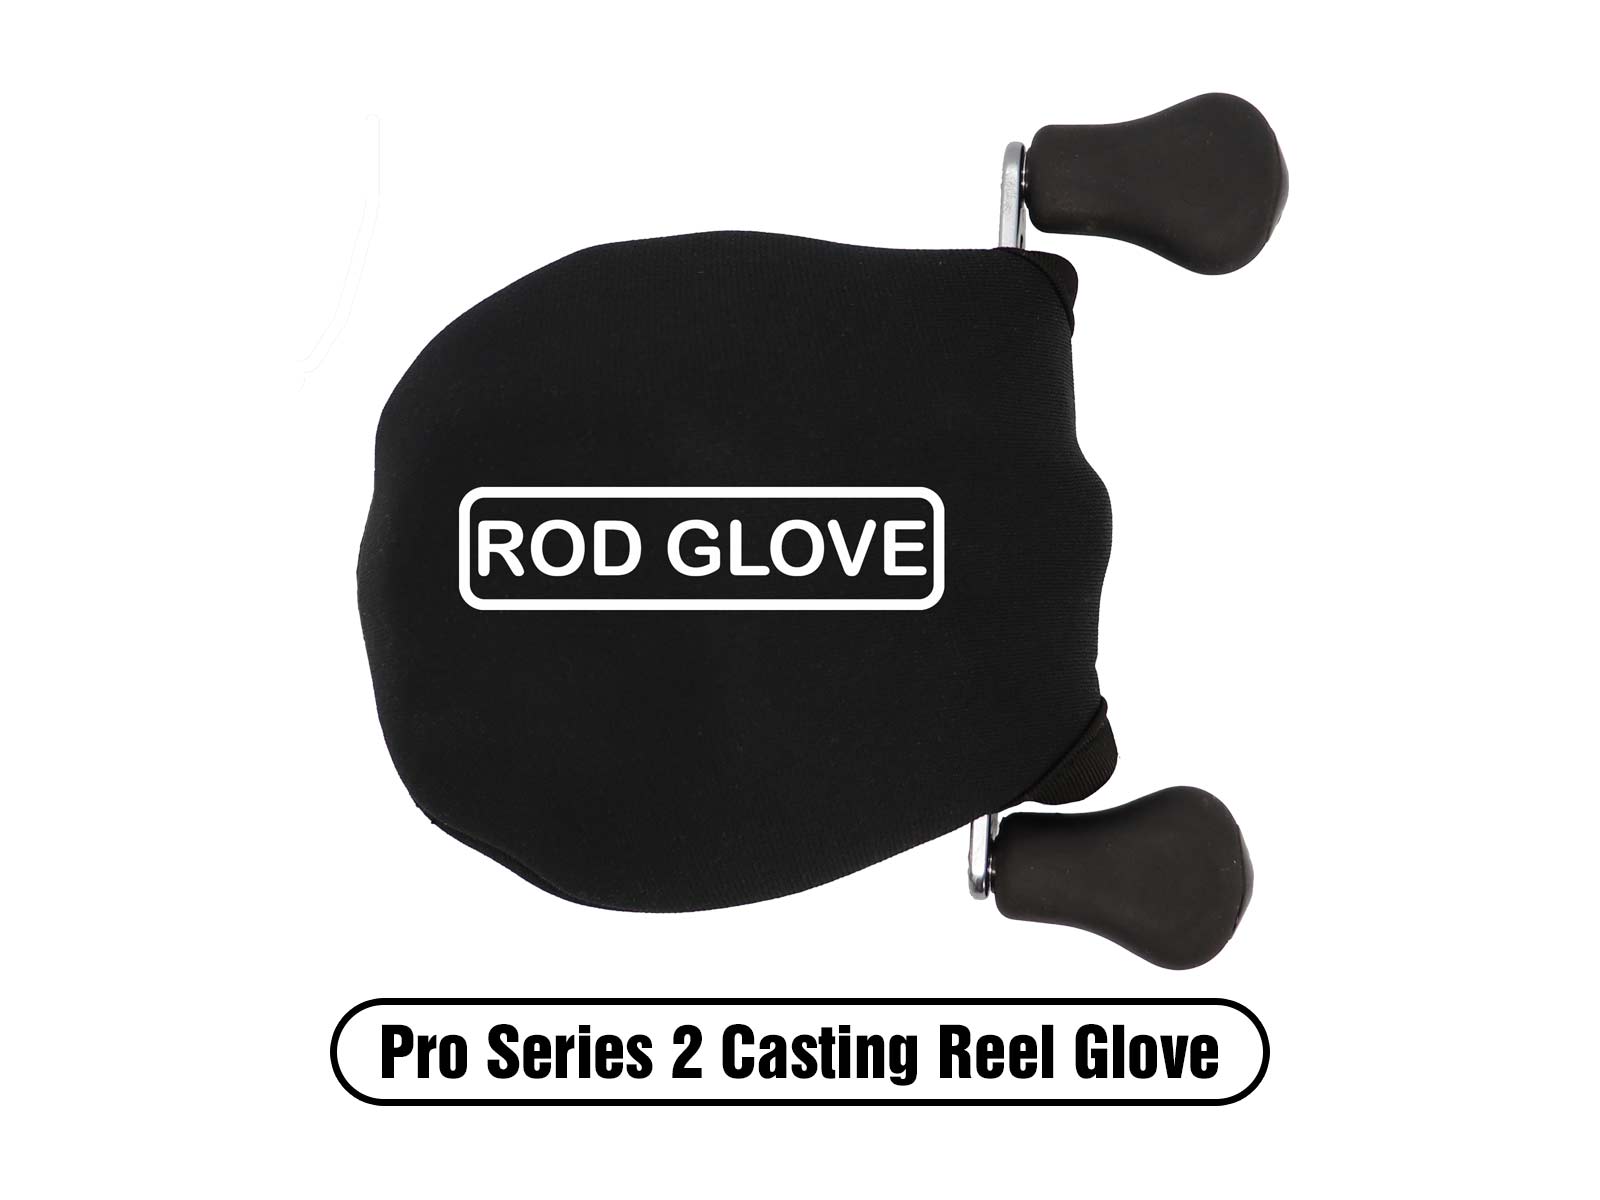 The Rod Glove Casting Rod Gloves